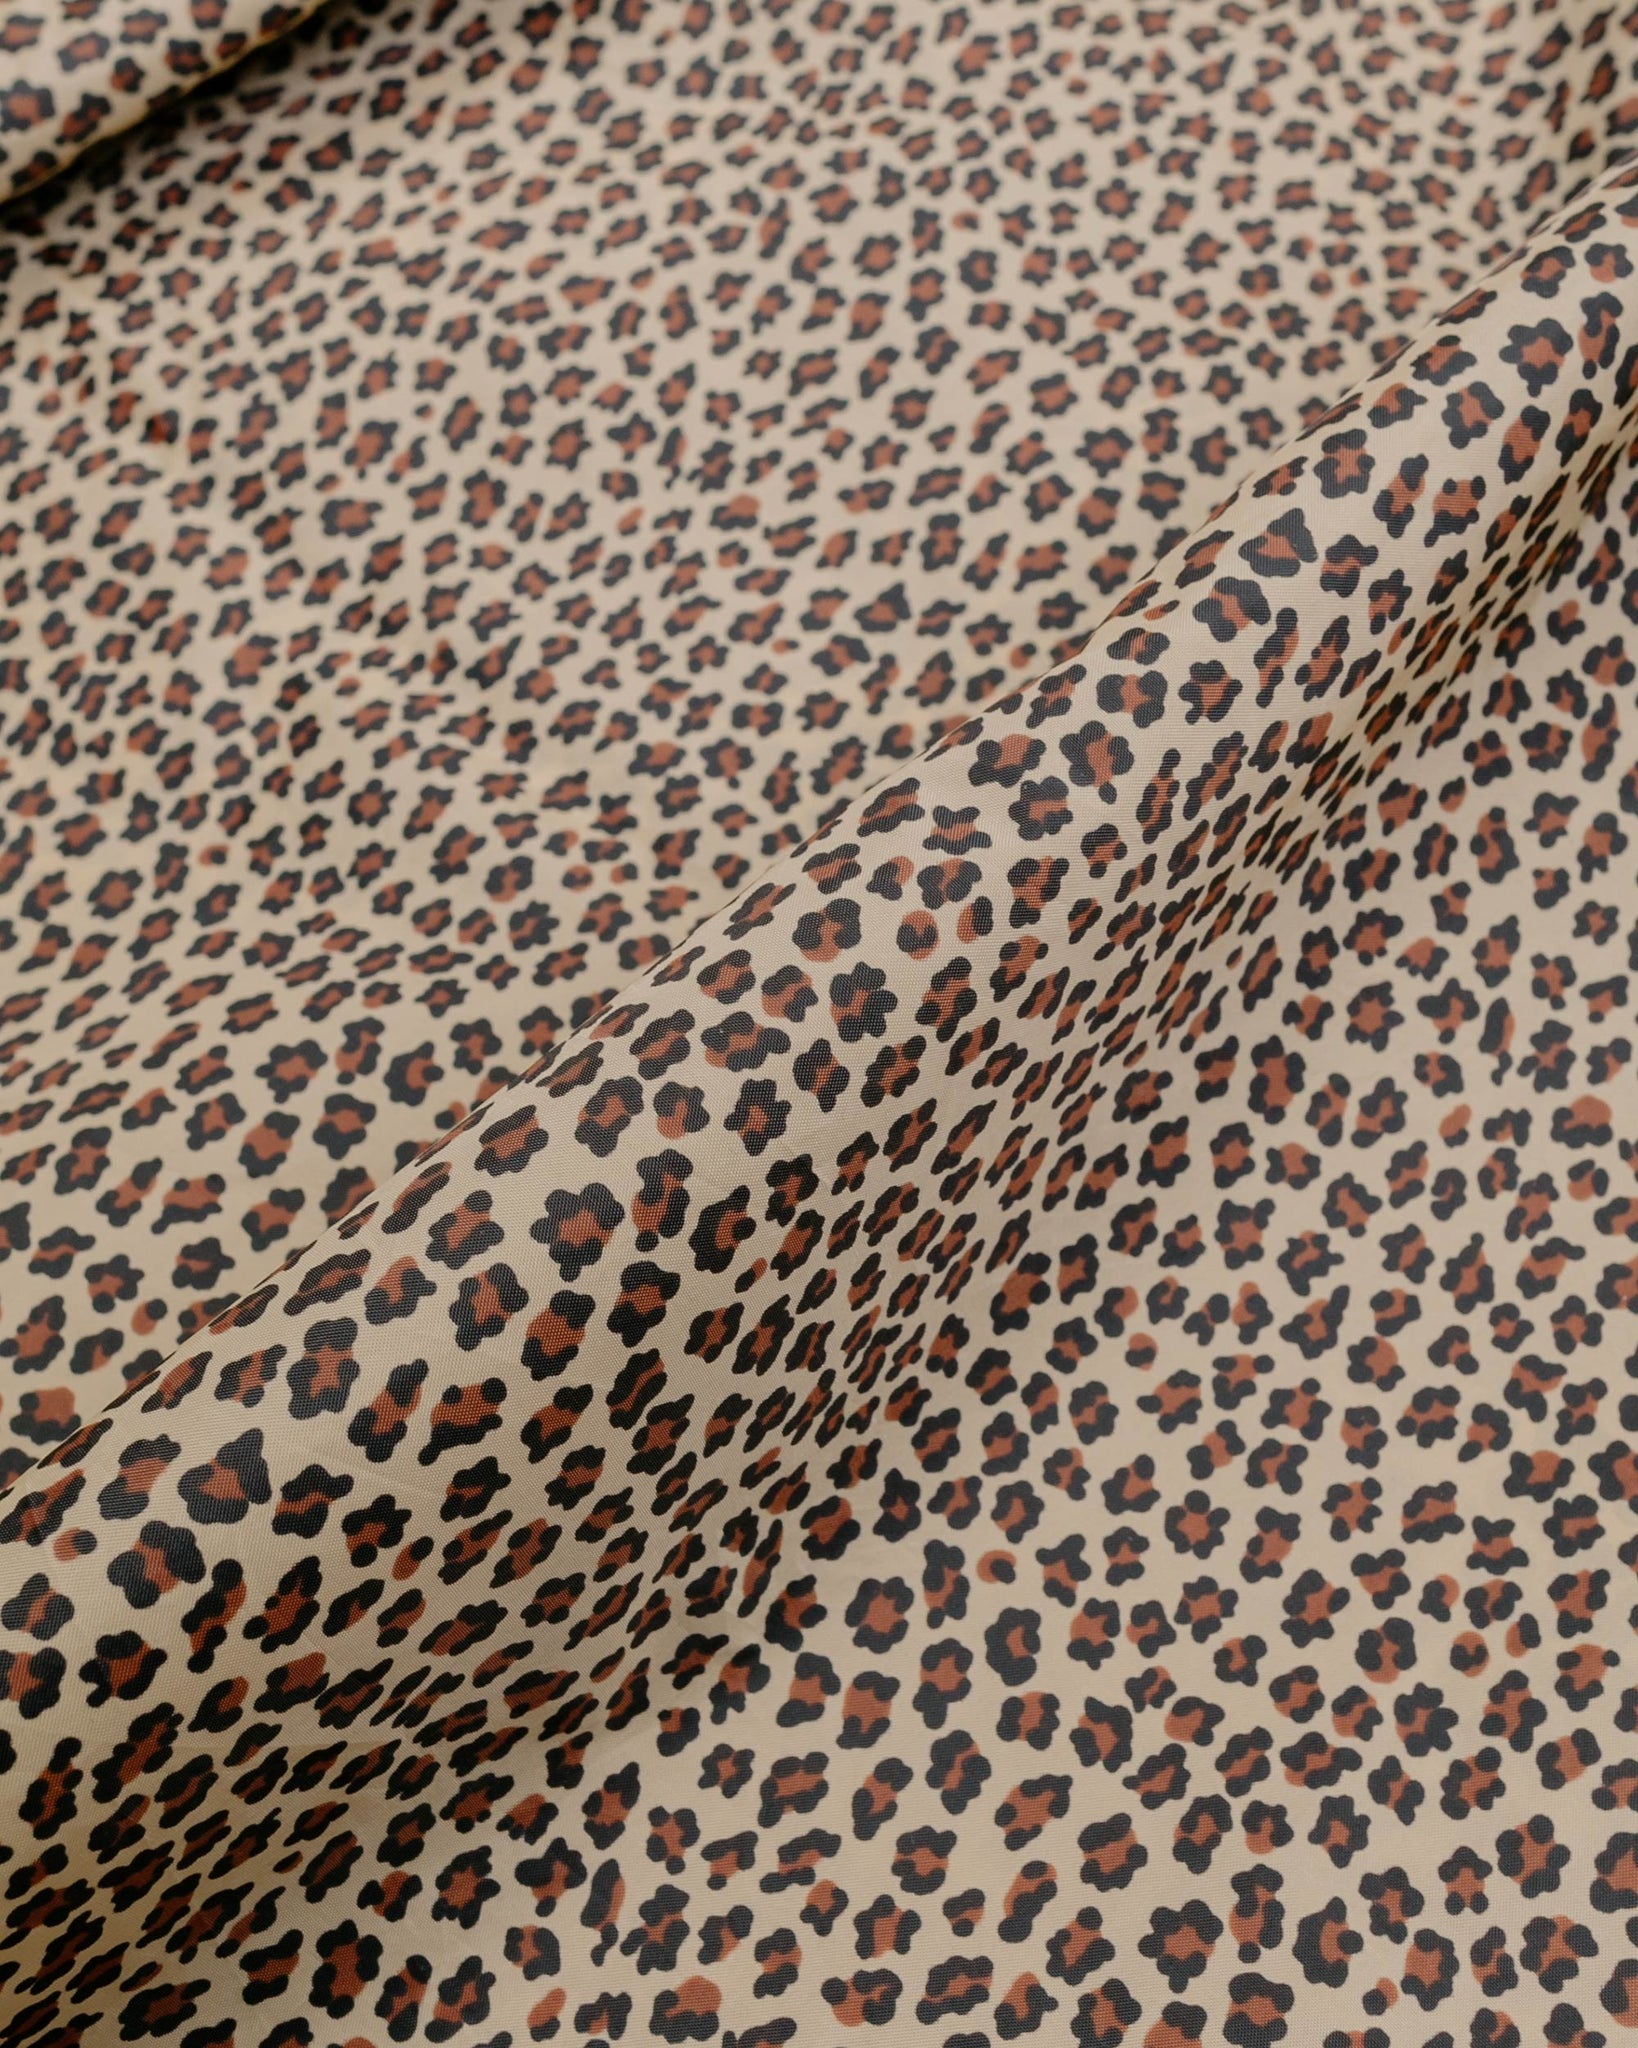 Engineered Garments Cagoule Shirt Khaki Nylon Leopard Print fabric